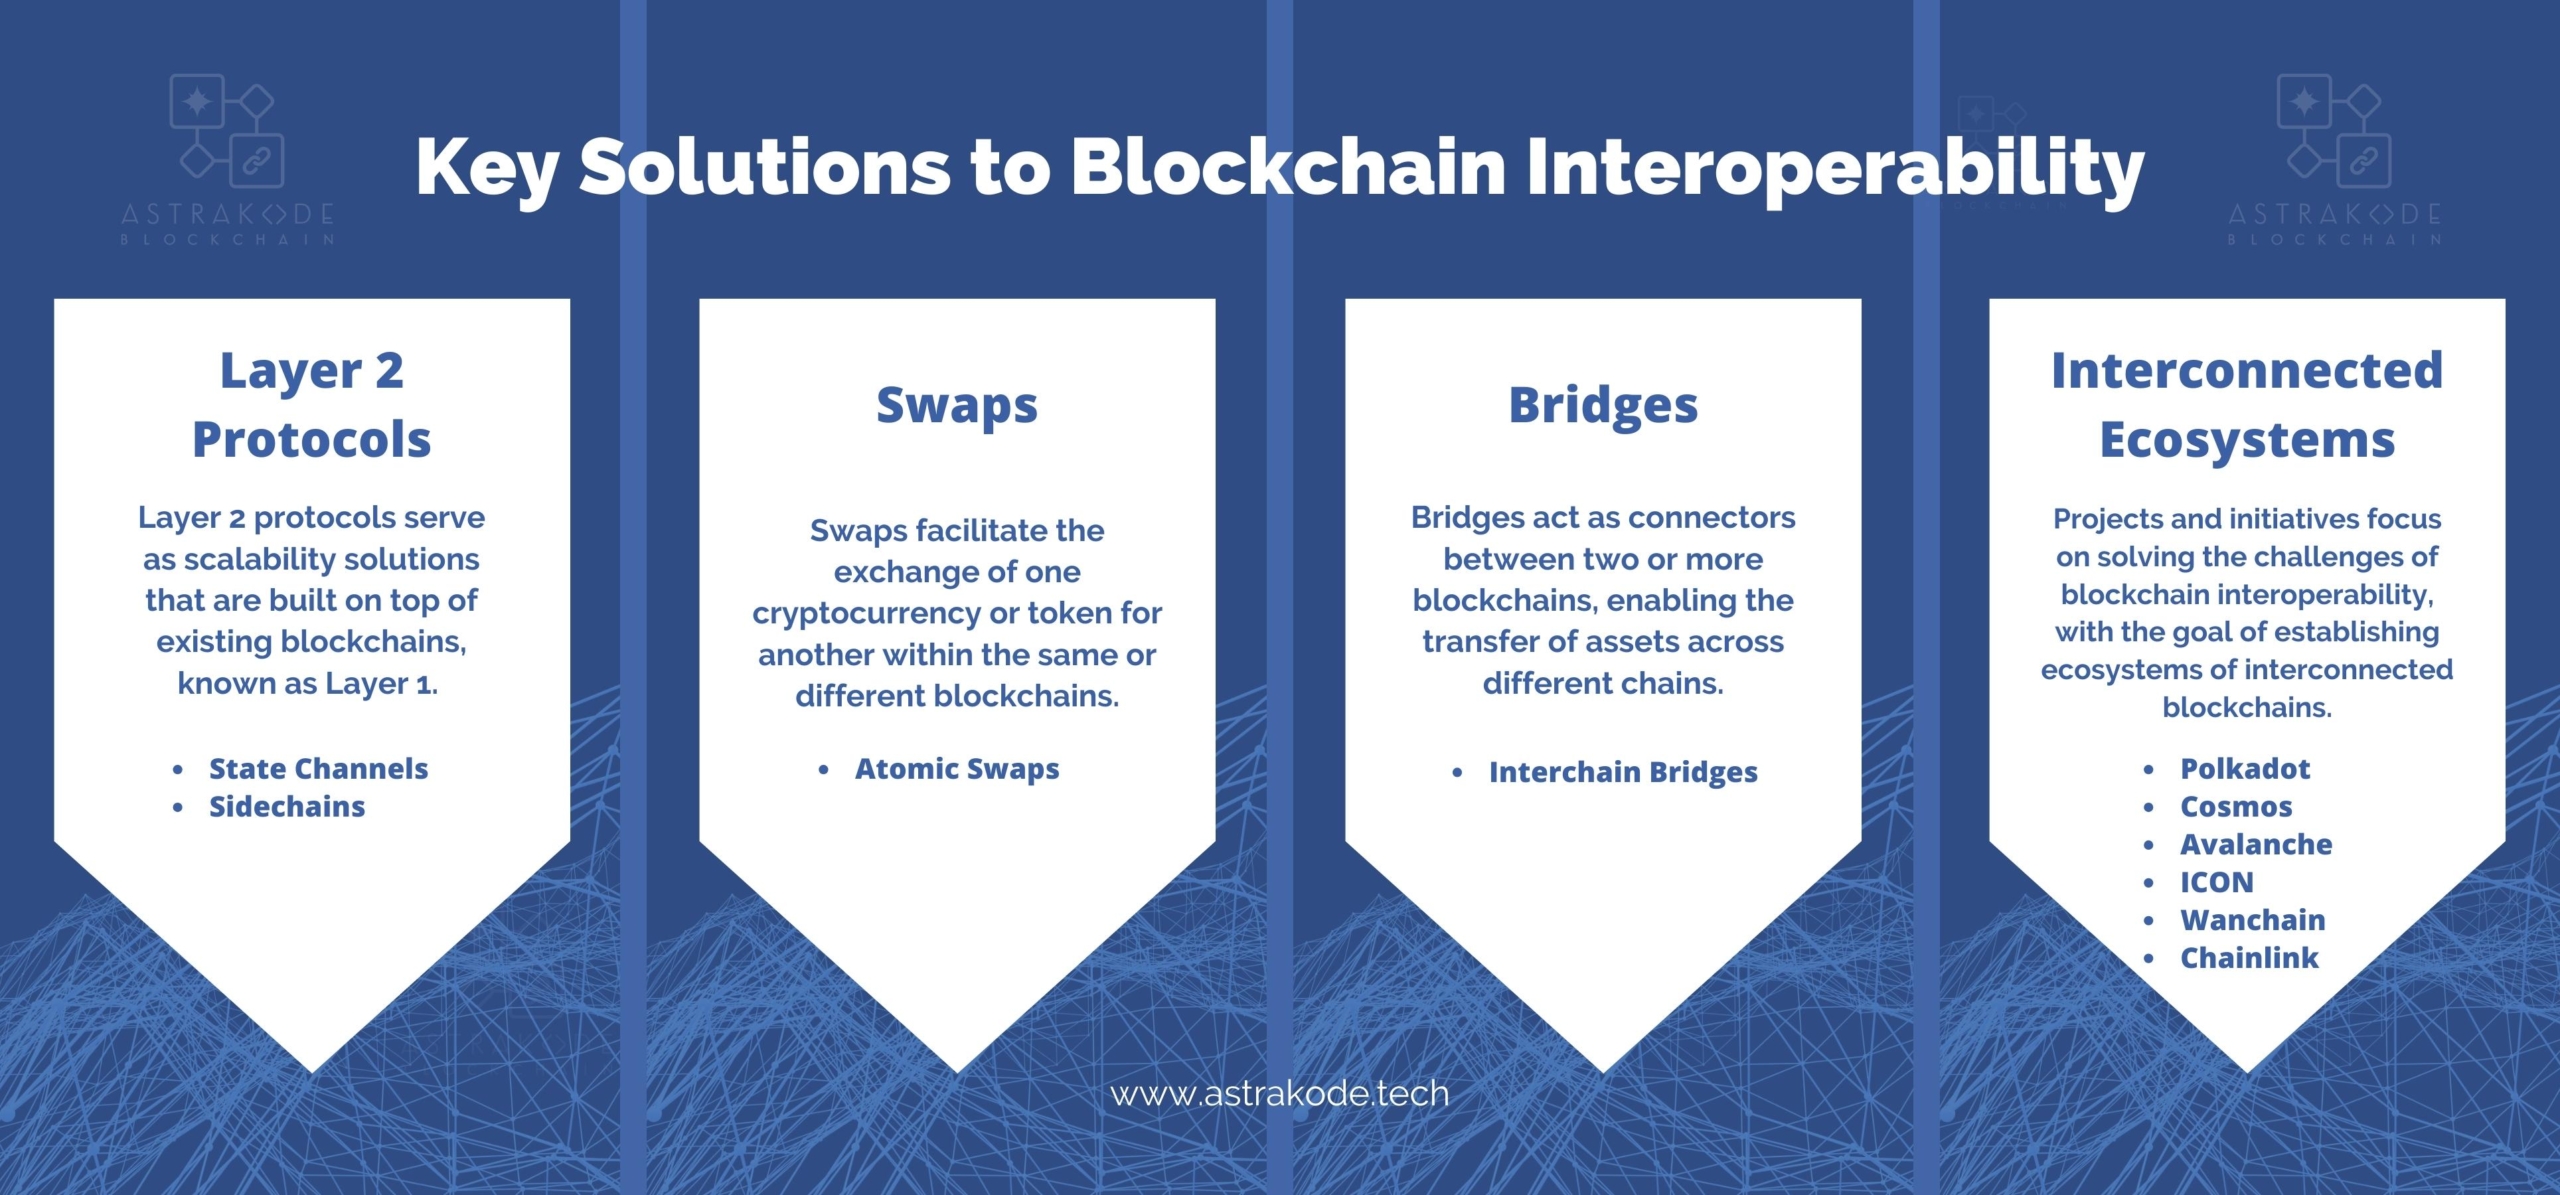 Key Solutions to Blockchain Interoperability